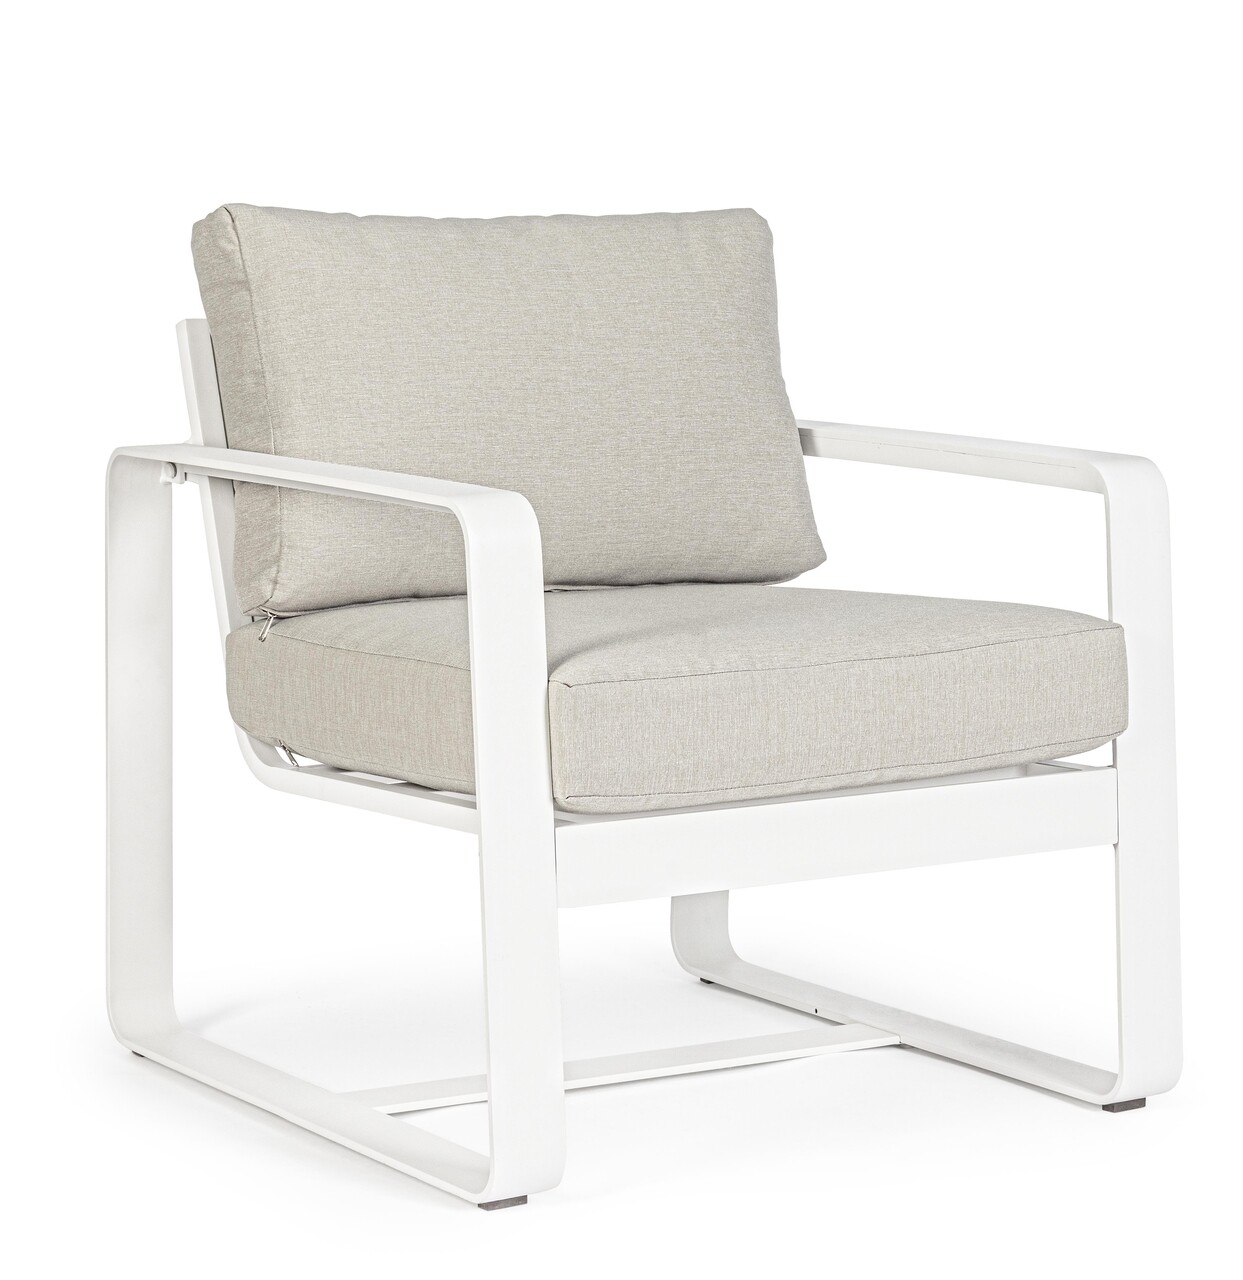 Merrigan kerti/terasz fotel, bizzotto, 74 x 78 x 84 cm, alumínium/ofelin szövet, fehér